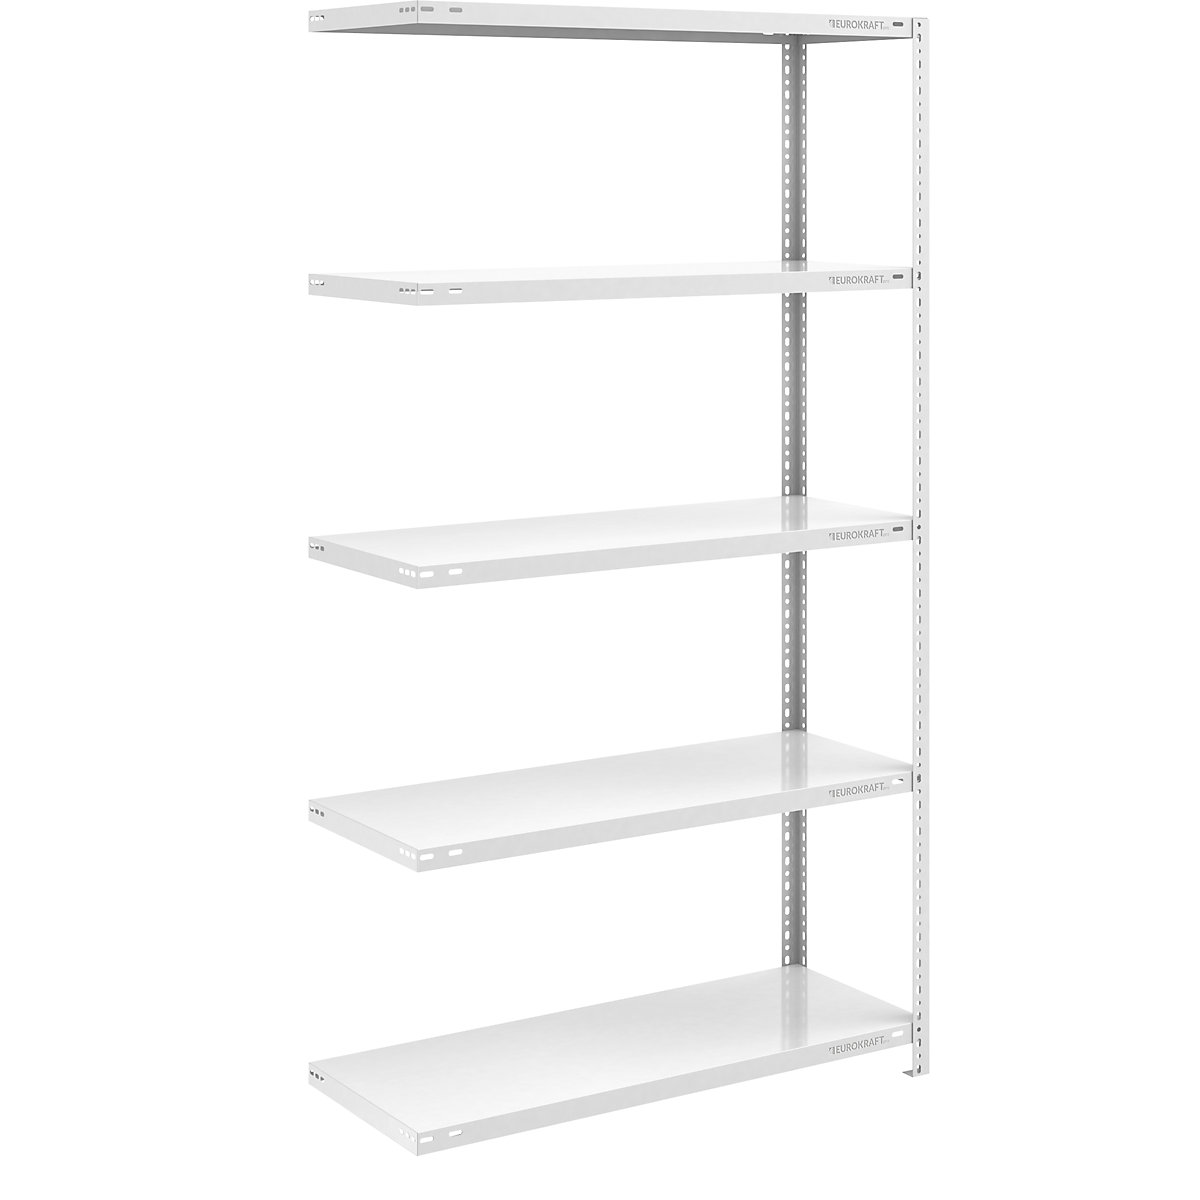 Bolt-together shelf unit, light duty, plastic coated – eurokraft pro, shelf unit height 2000 mm, shelf width 1000 mm, depth 500 mm, extension shelf unit-9